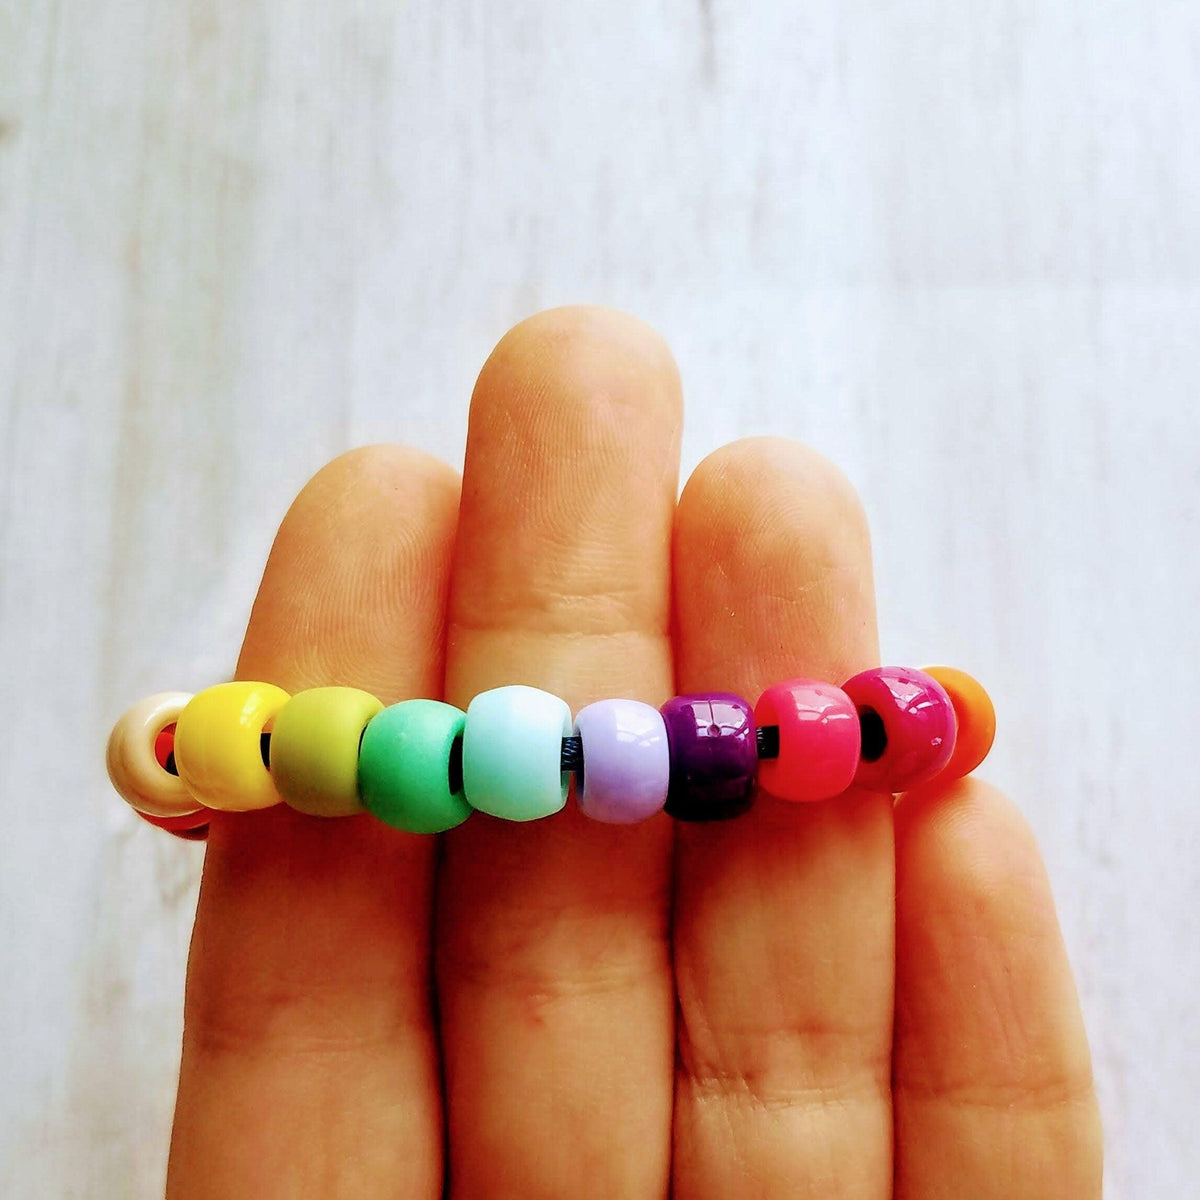 Big Bead Tie On Bracelet, Forte inspired rainbow bracelet, rainbow beads,  big bead bracelet, cord bracelet, preppy bracelet multicolor roller